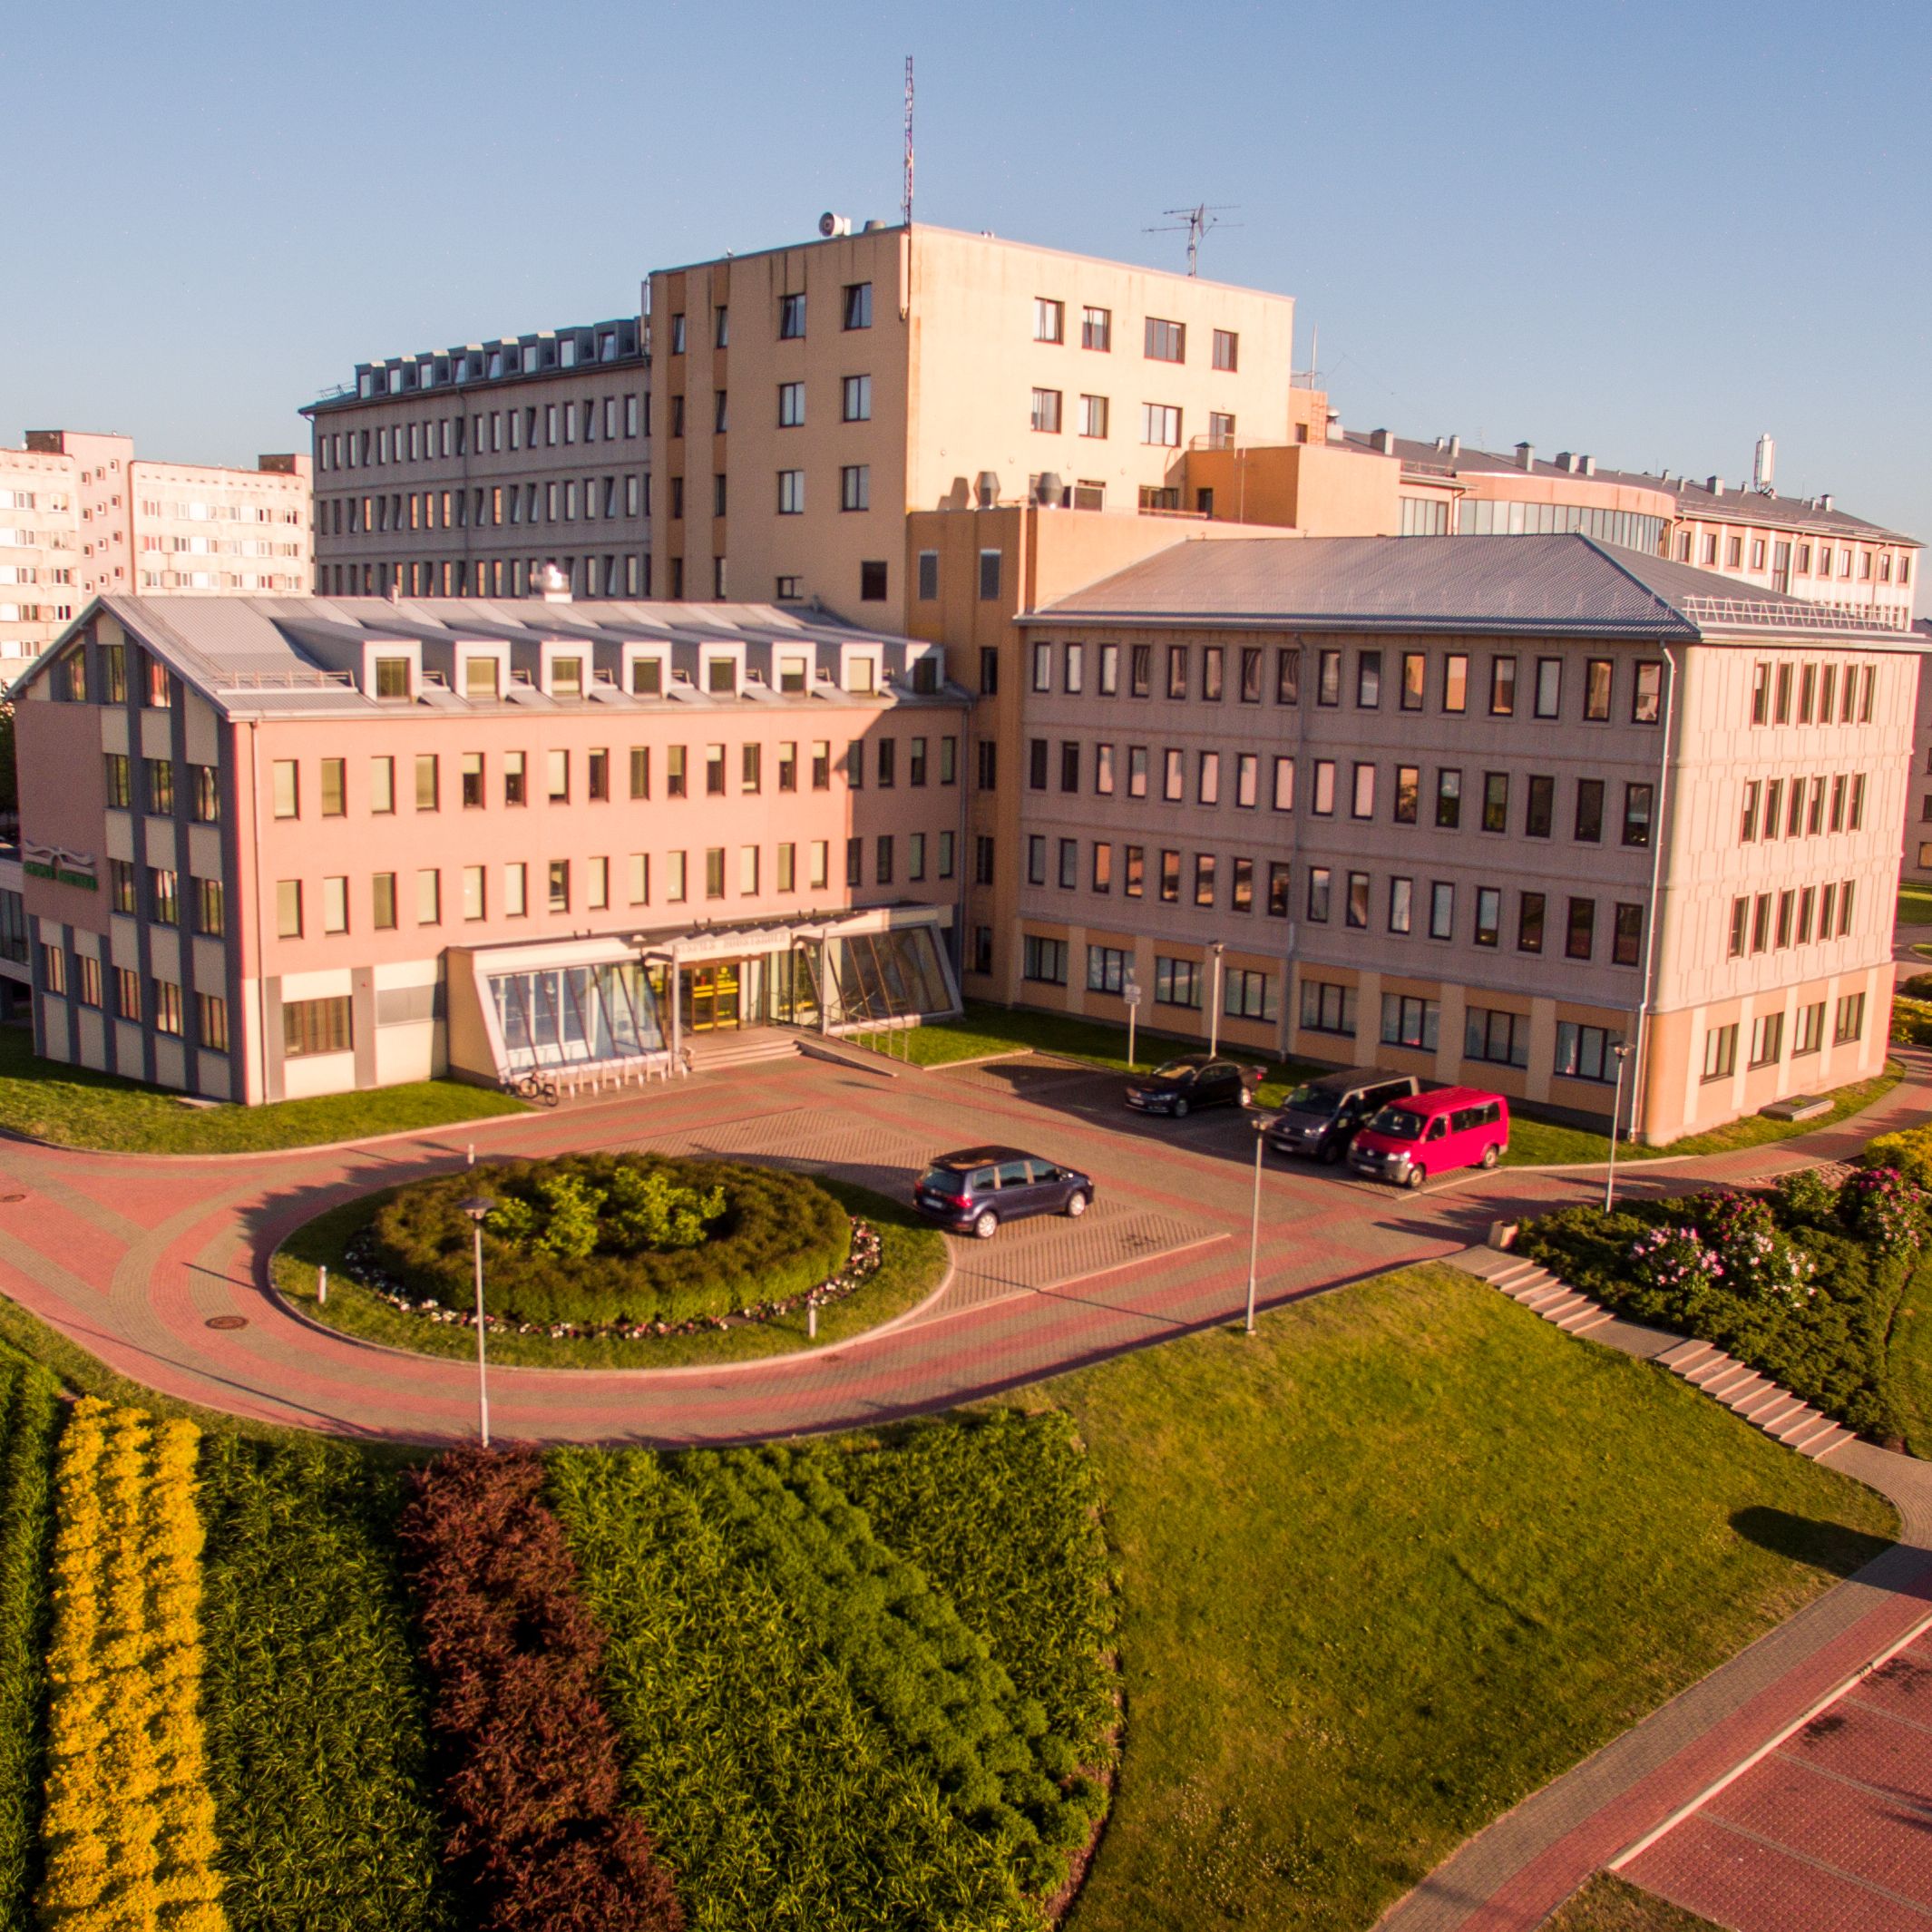 Ventspils Augstskola